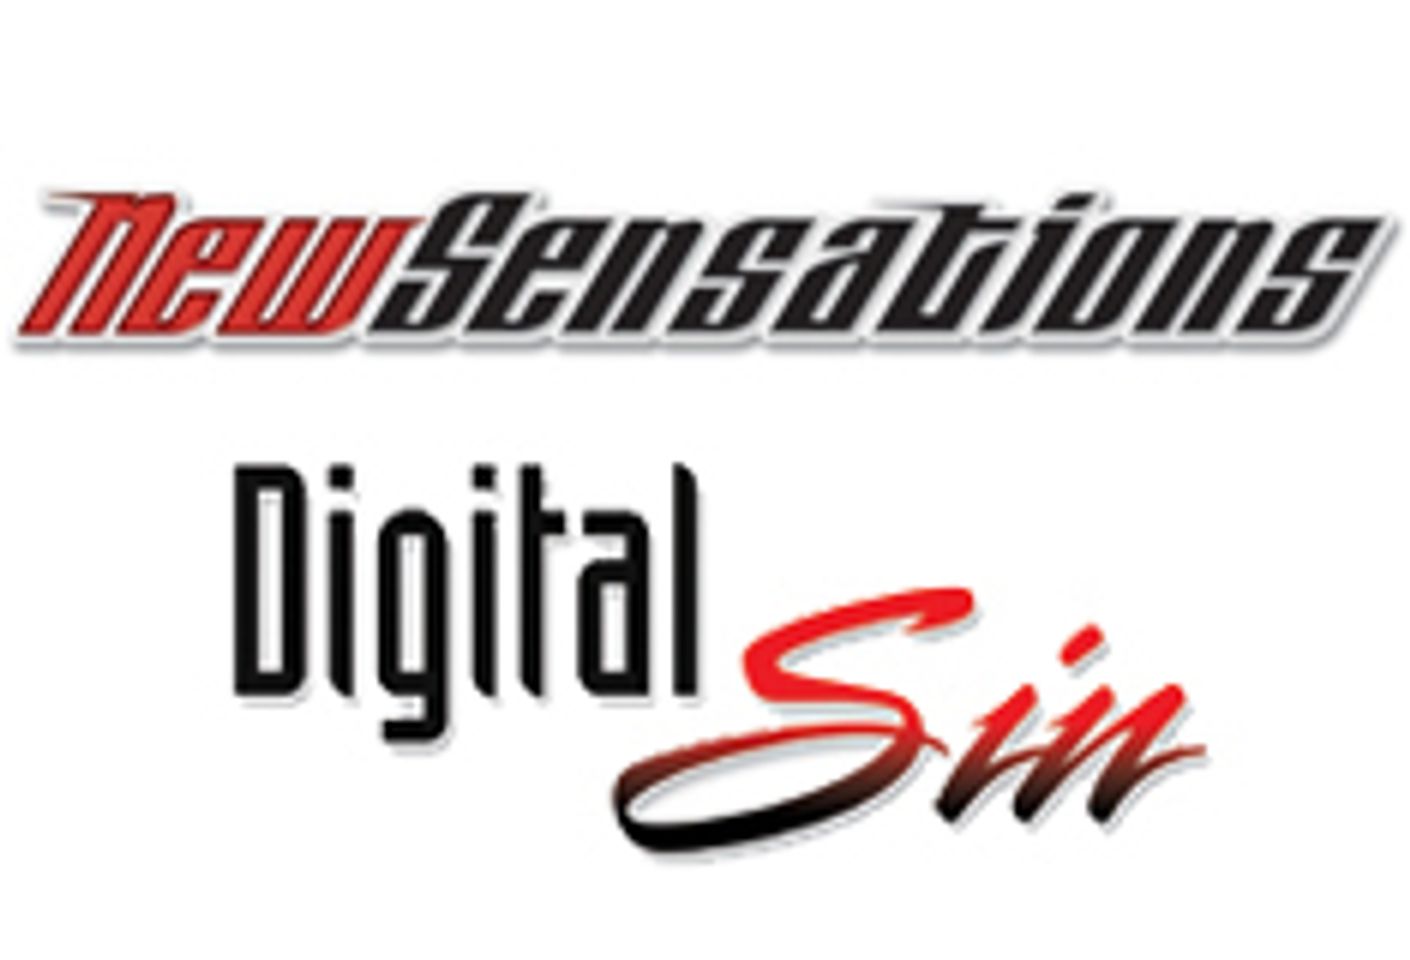 New Sensations/Digital Sin Rack Up 48 Noms for 2015 AVN Awards